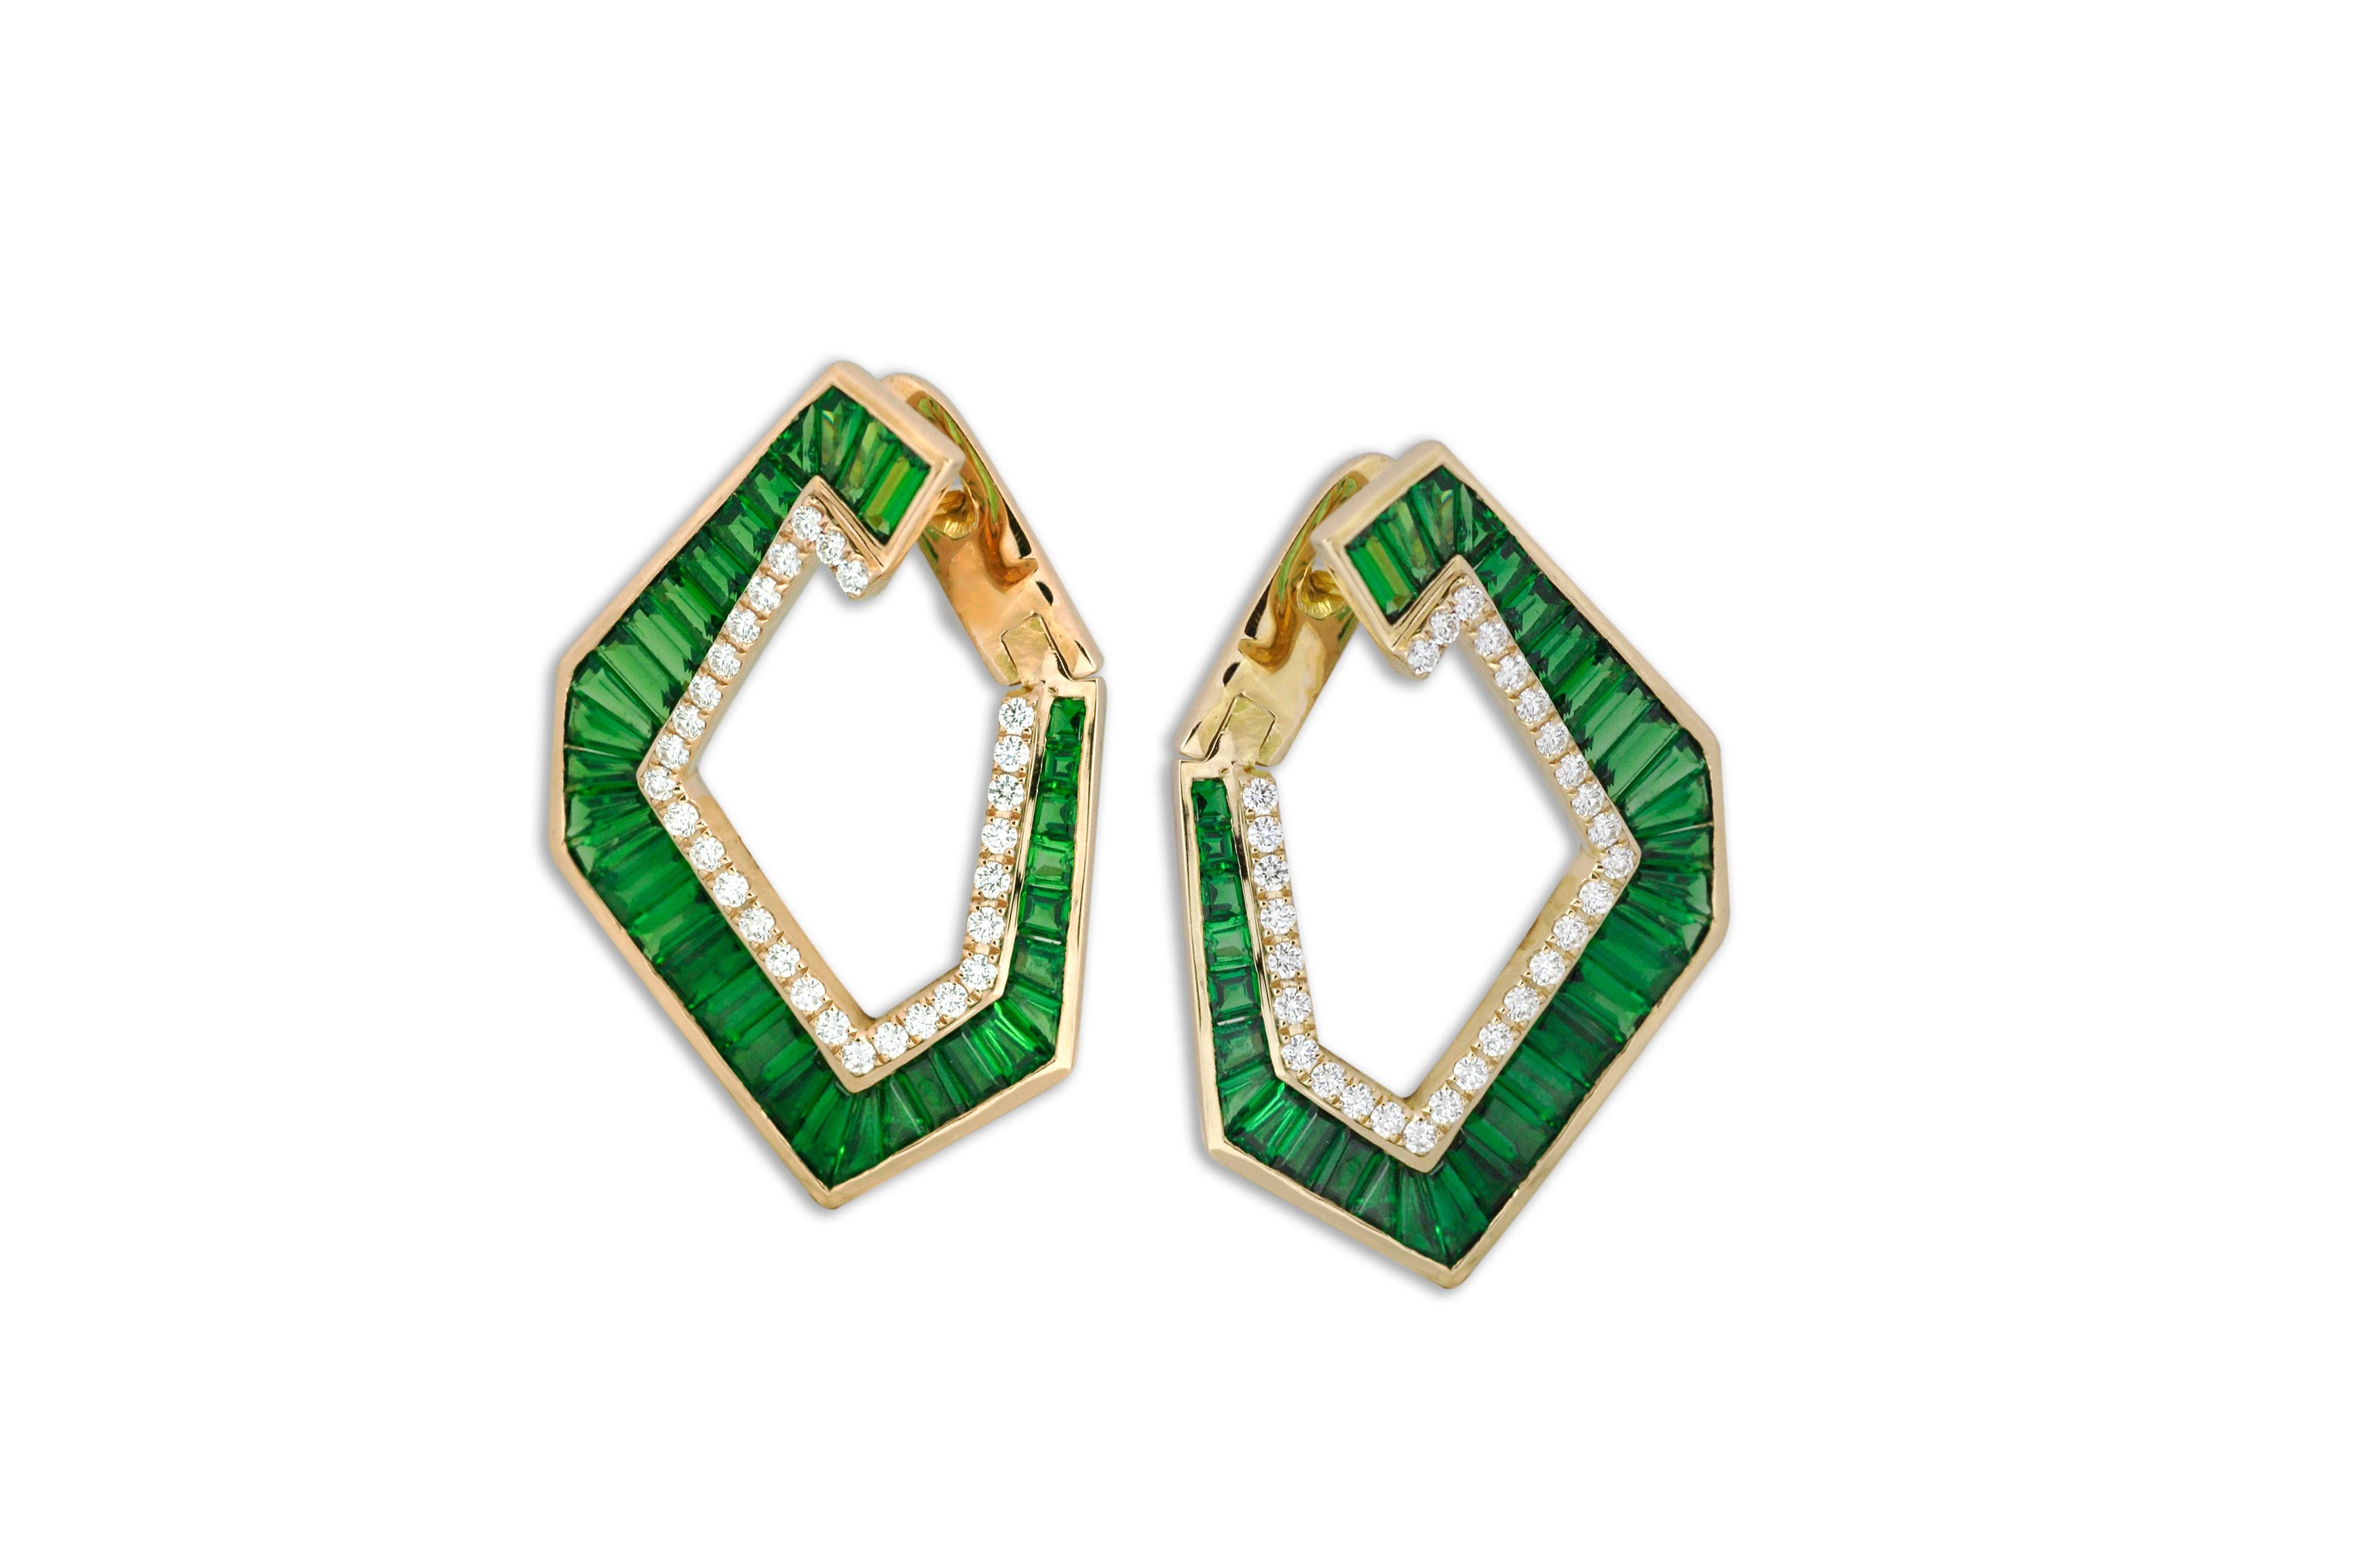 Origami Link No. 5 Tsavorite and Diamond Grande Earrings 18k Gold Settings For Sale